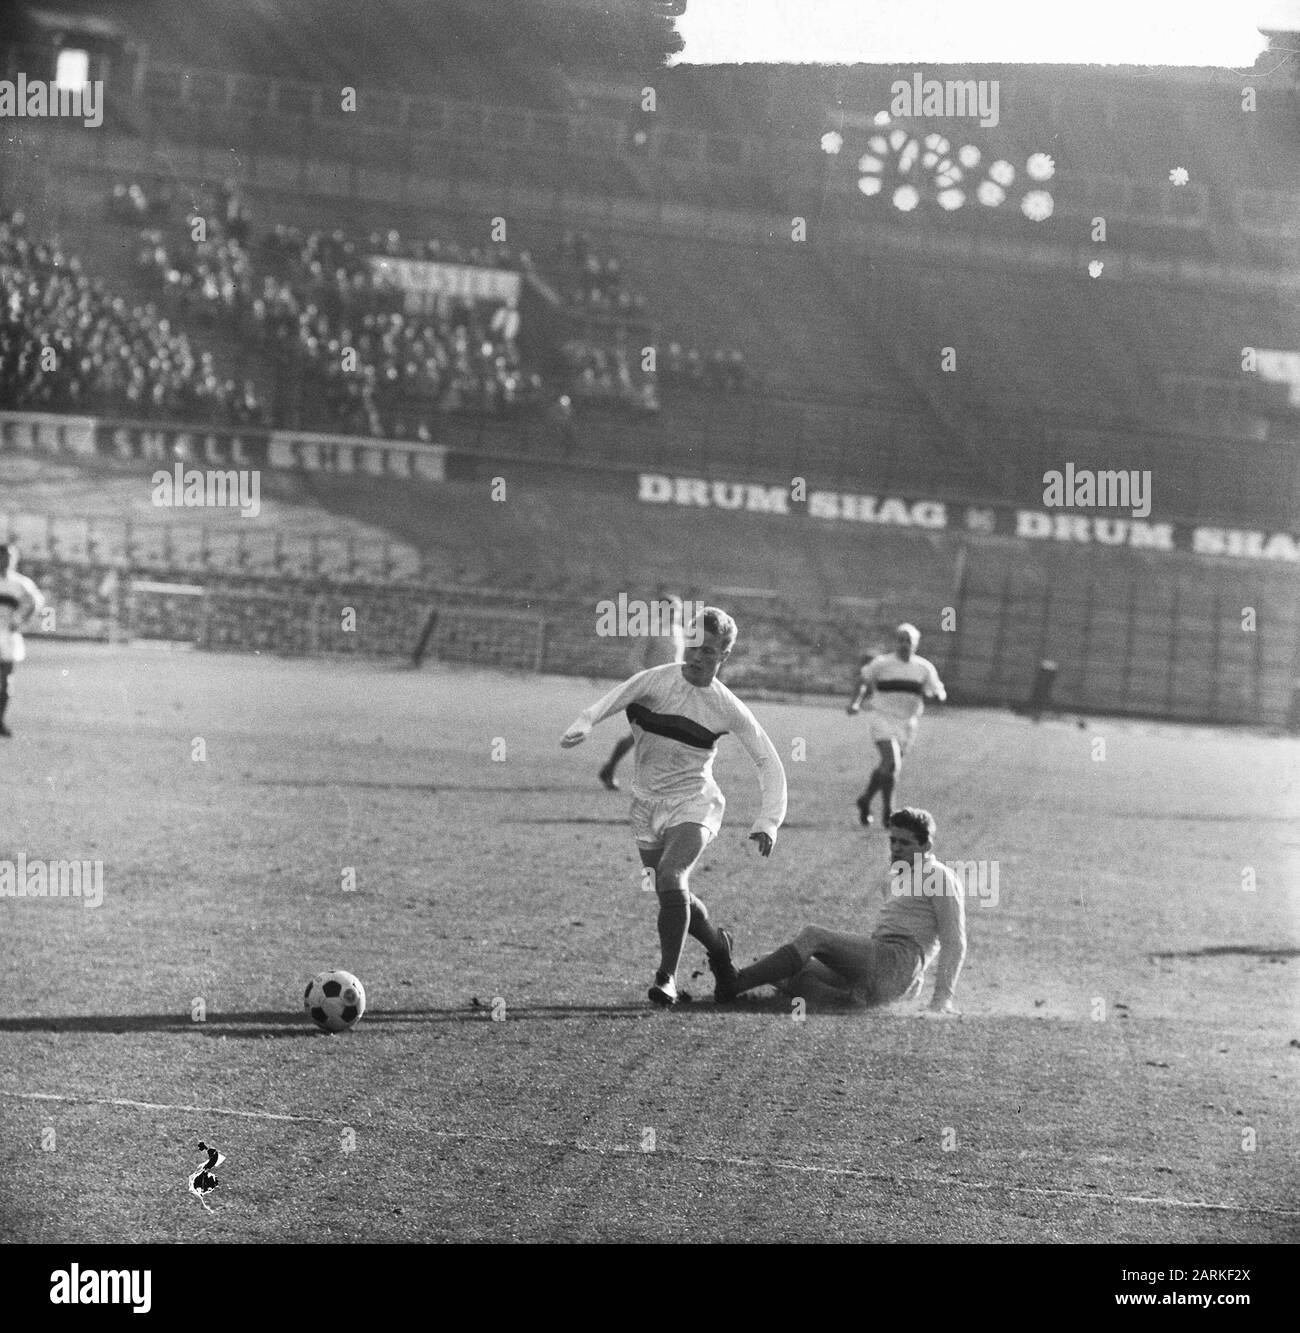 DWS against Sittardia 2-0, Huub Lenz in action Date: 31 January 1965 Keywords: sport, football Institution name: Sittardia Stock Photo